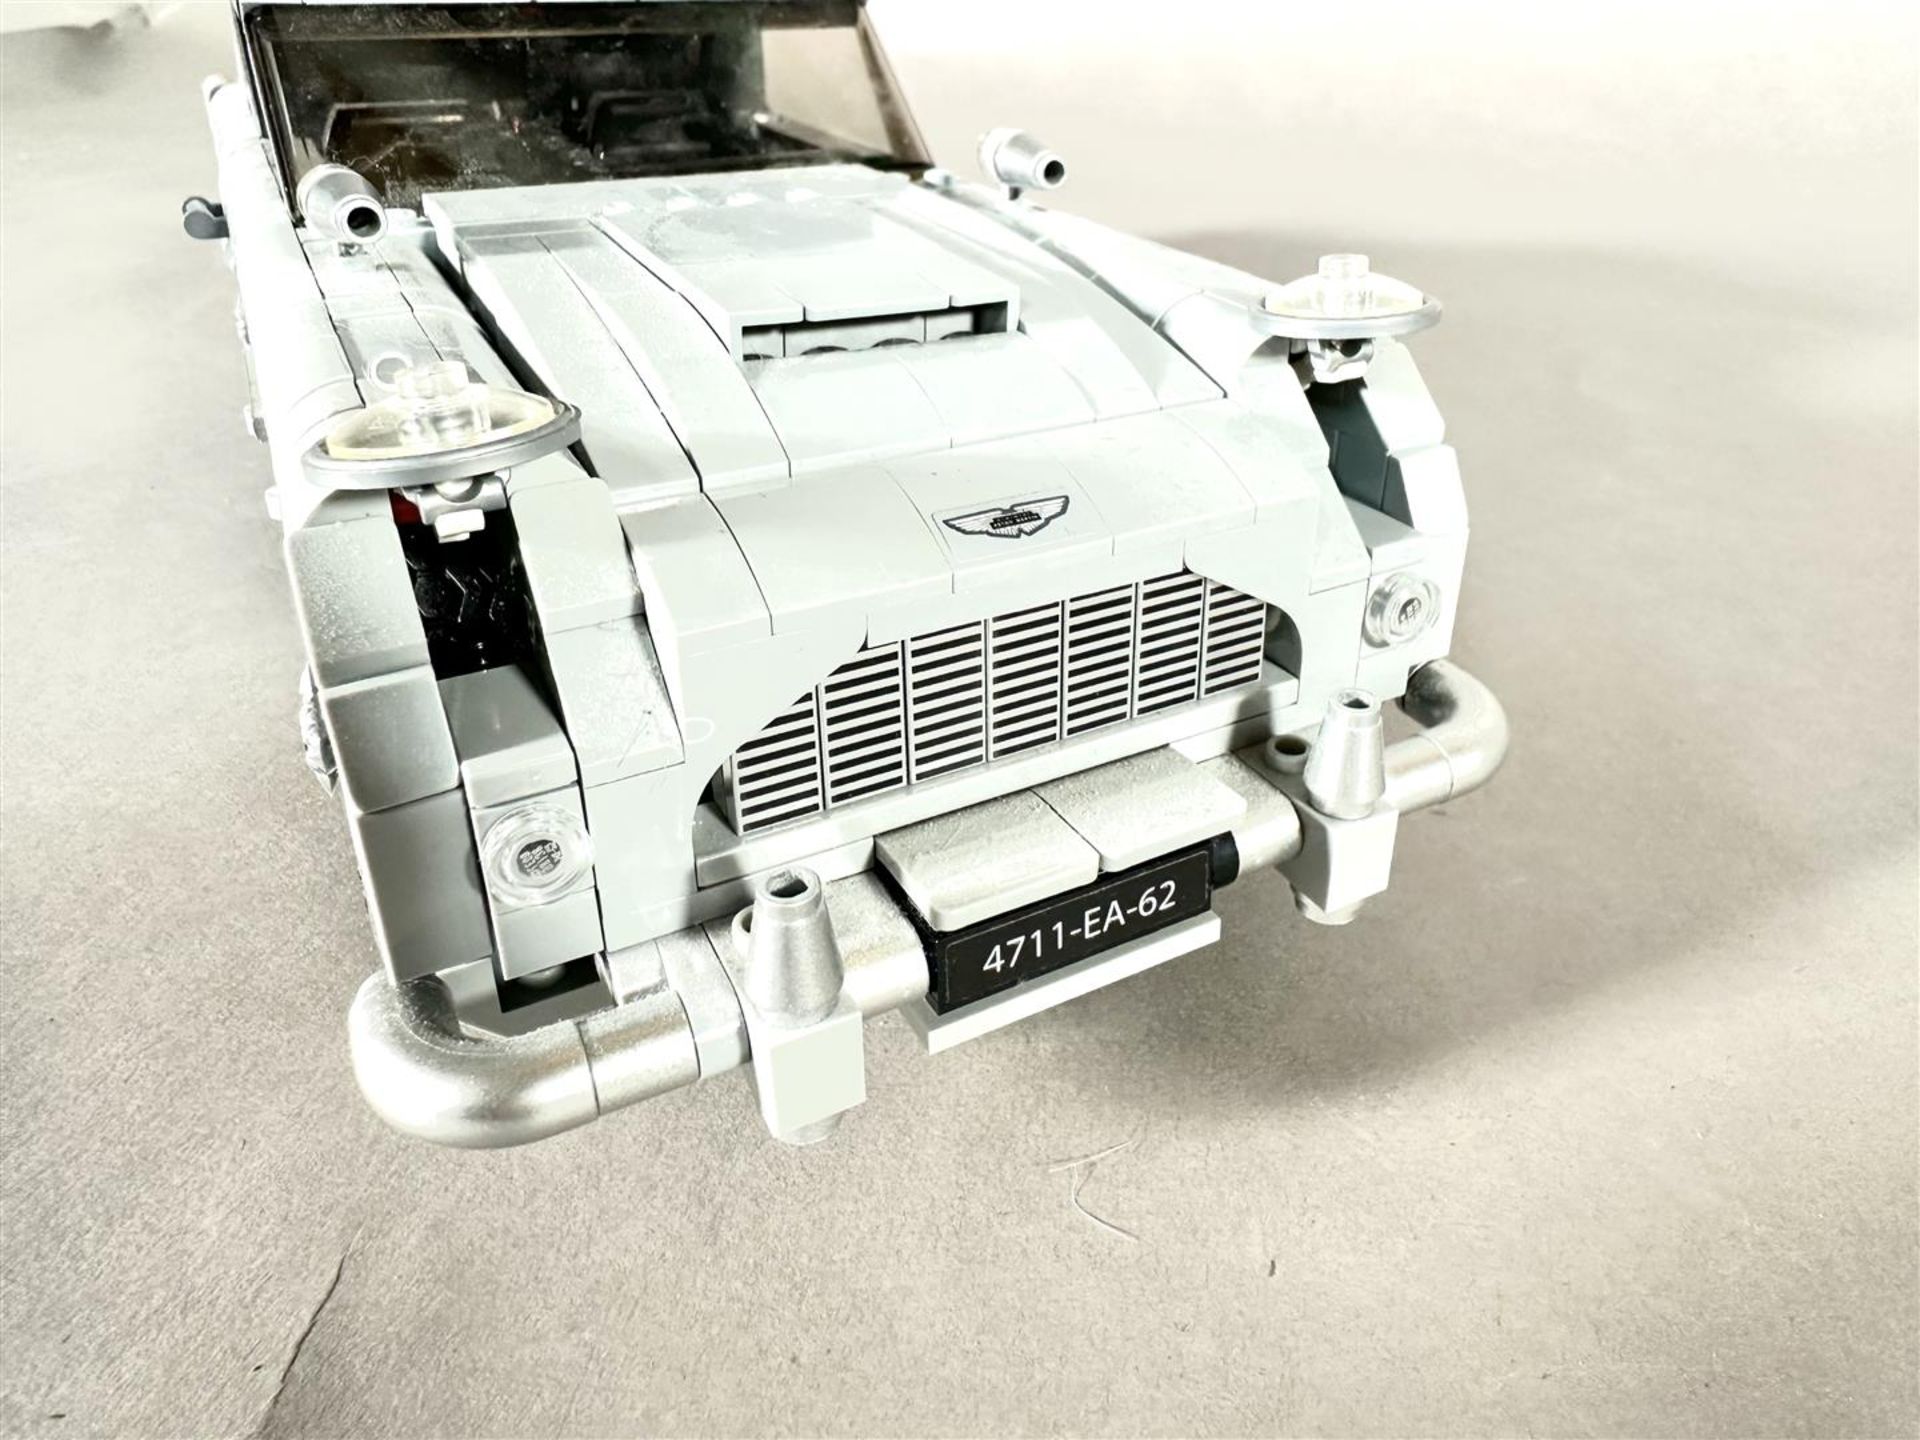 Lego - Creator Expert - 10262 - Car James Bond Aston Martin DB5 - 2000 - present. - Image 7 of 7